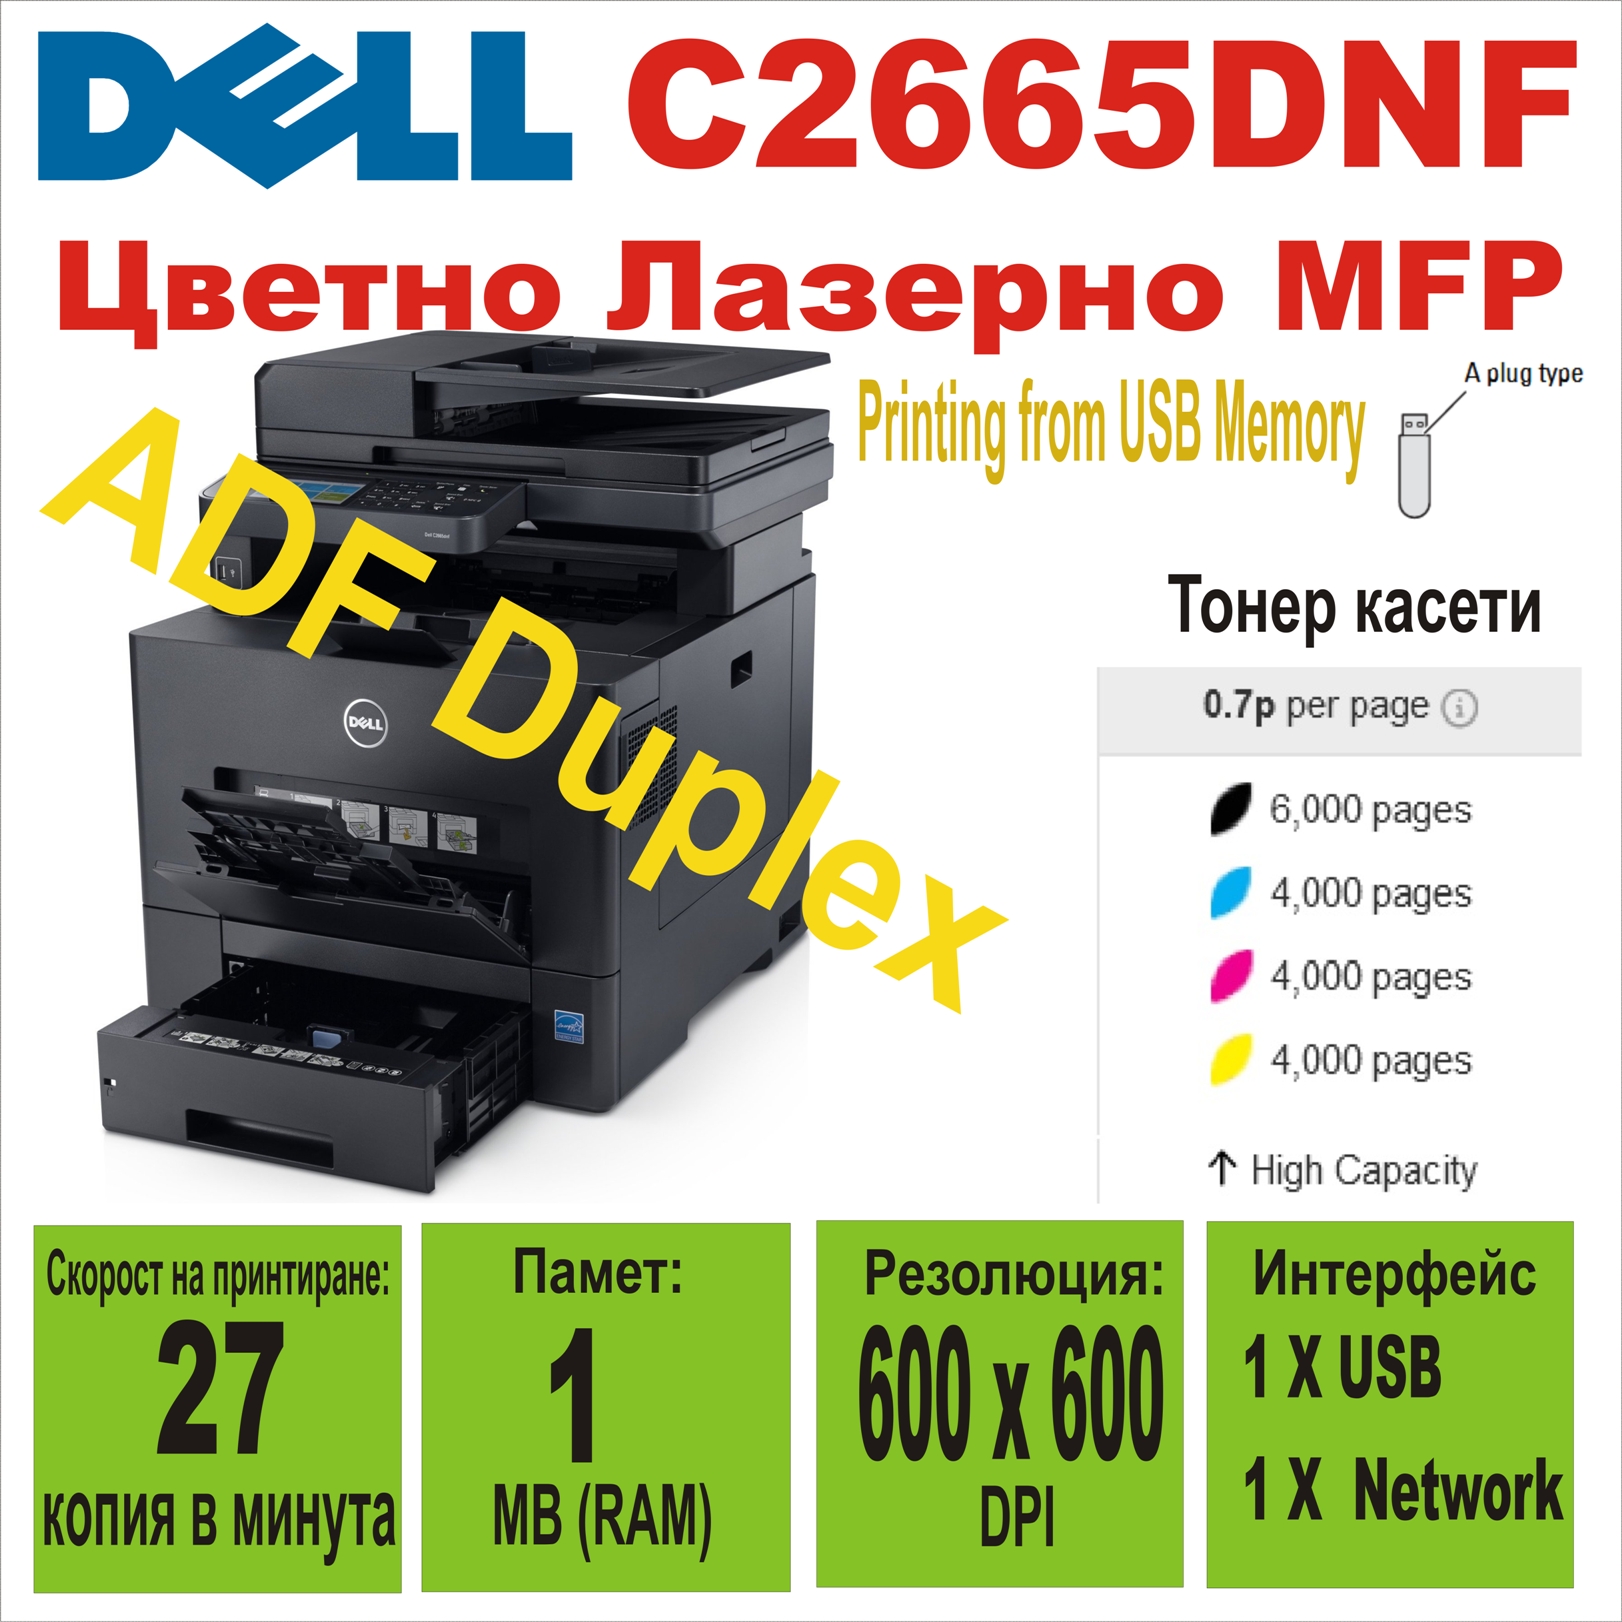 All-in-One Printer DELL C2665DNF